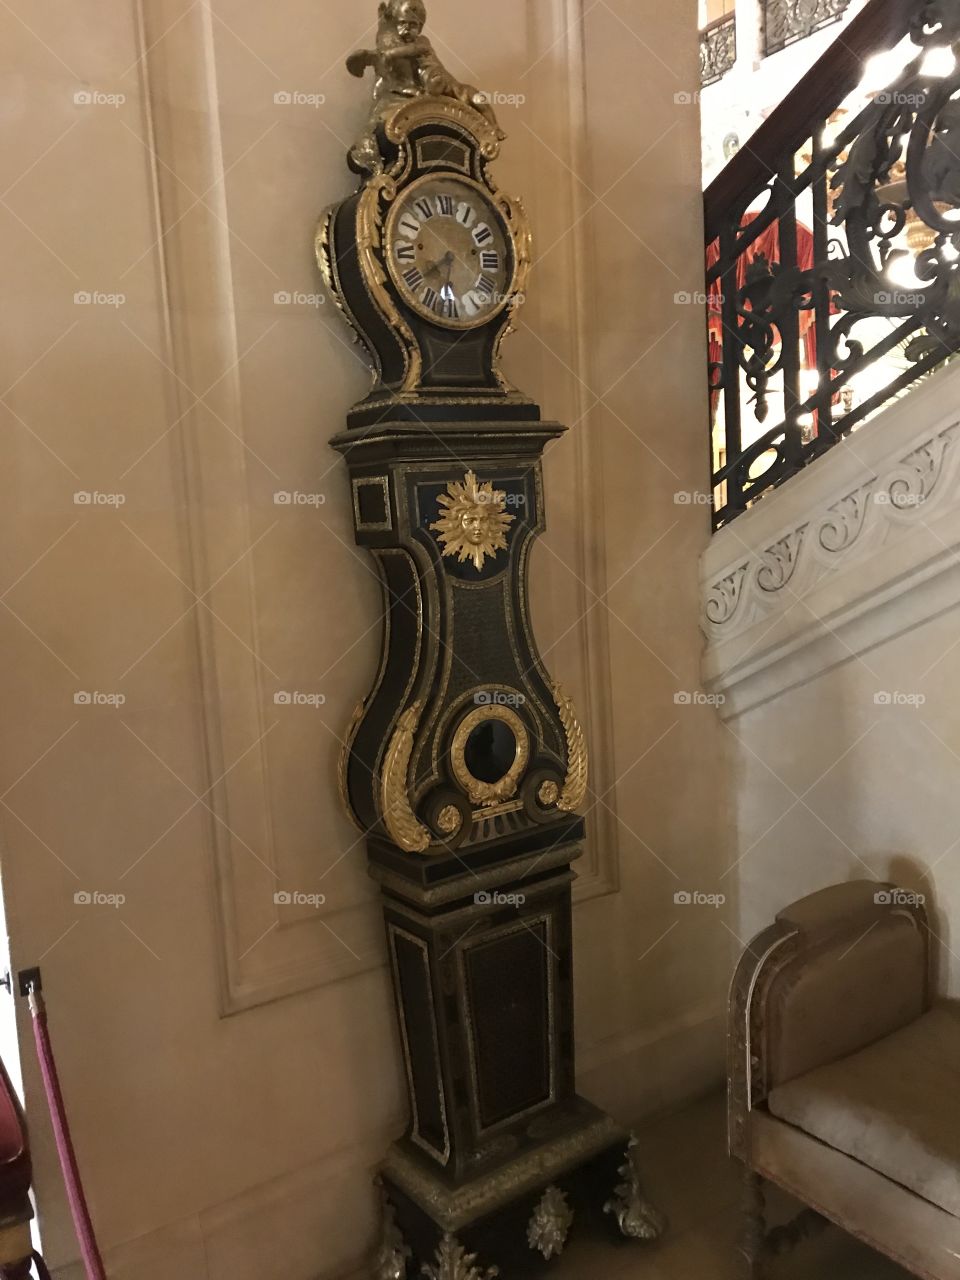 Vintage Grandfather Clock, The Breakers Mansion, Newport, RI